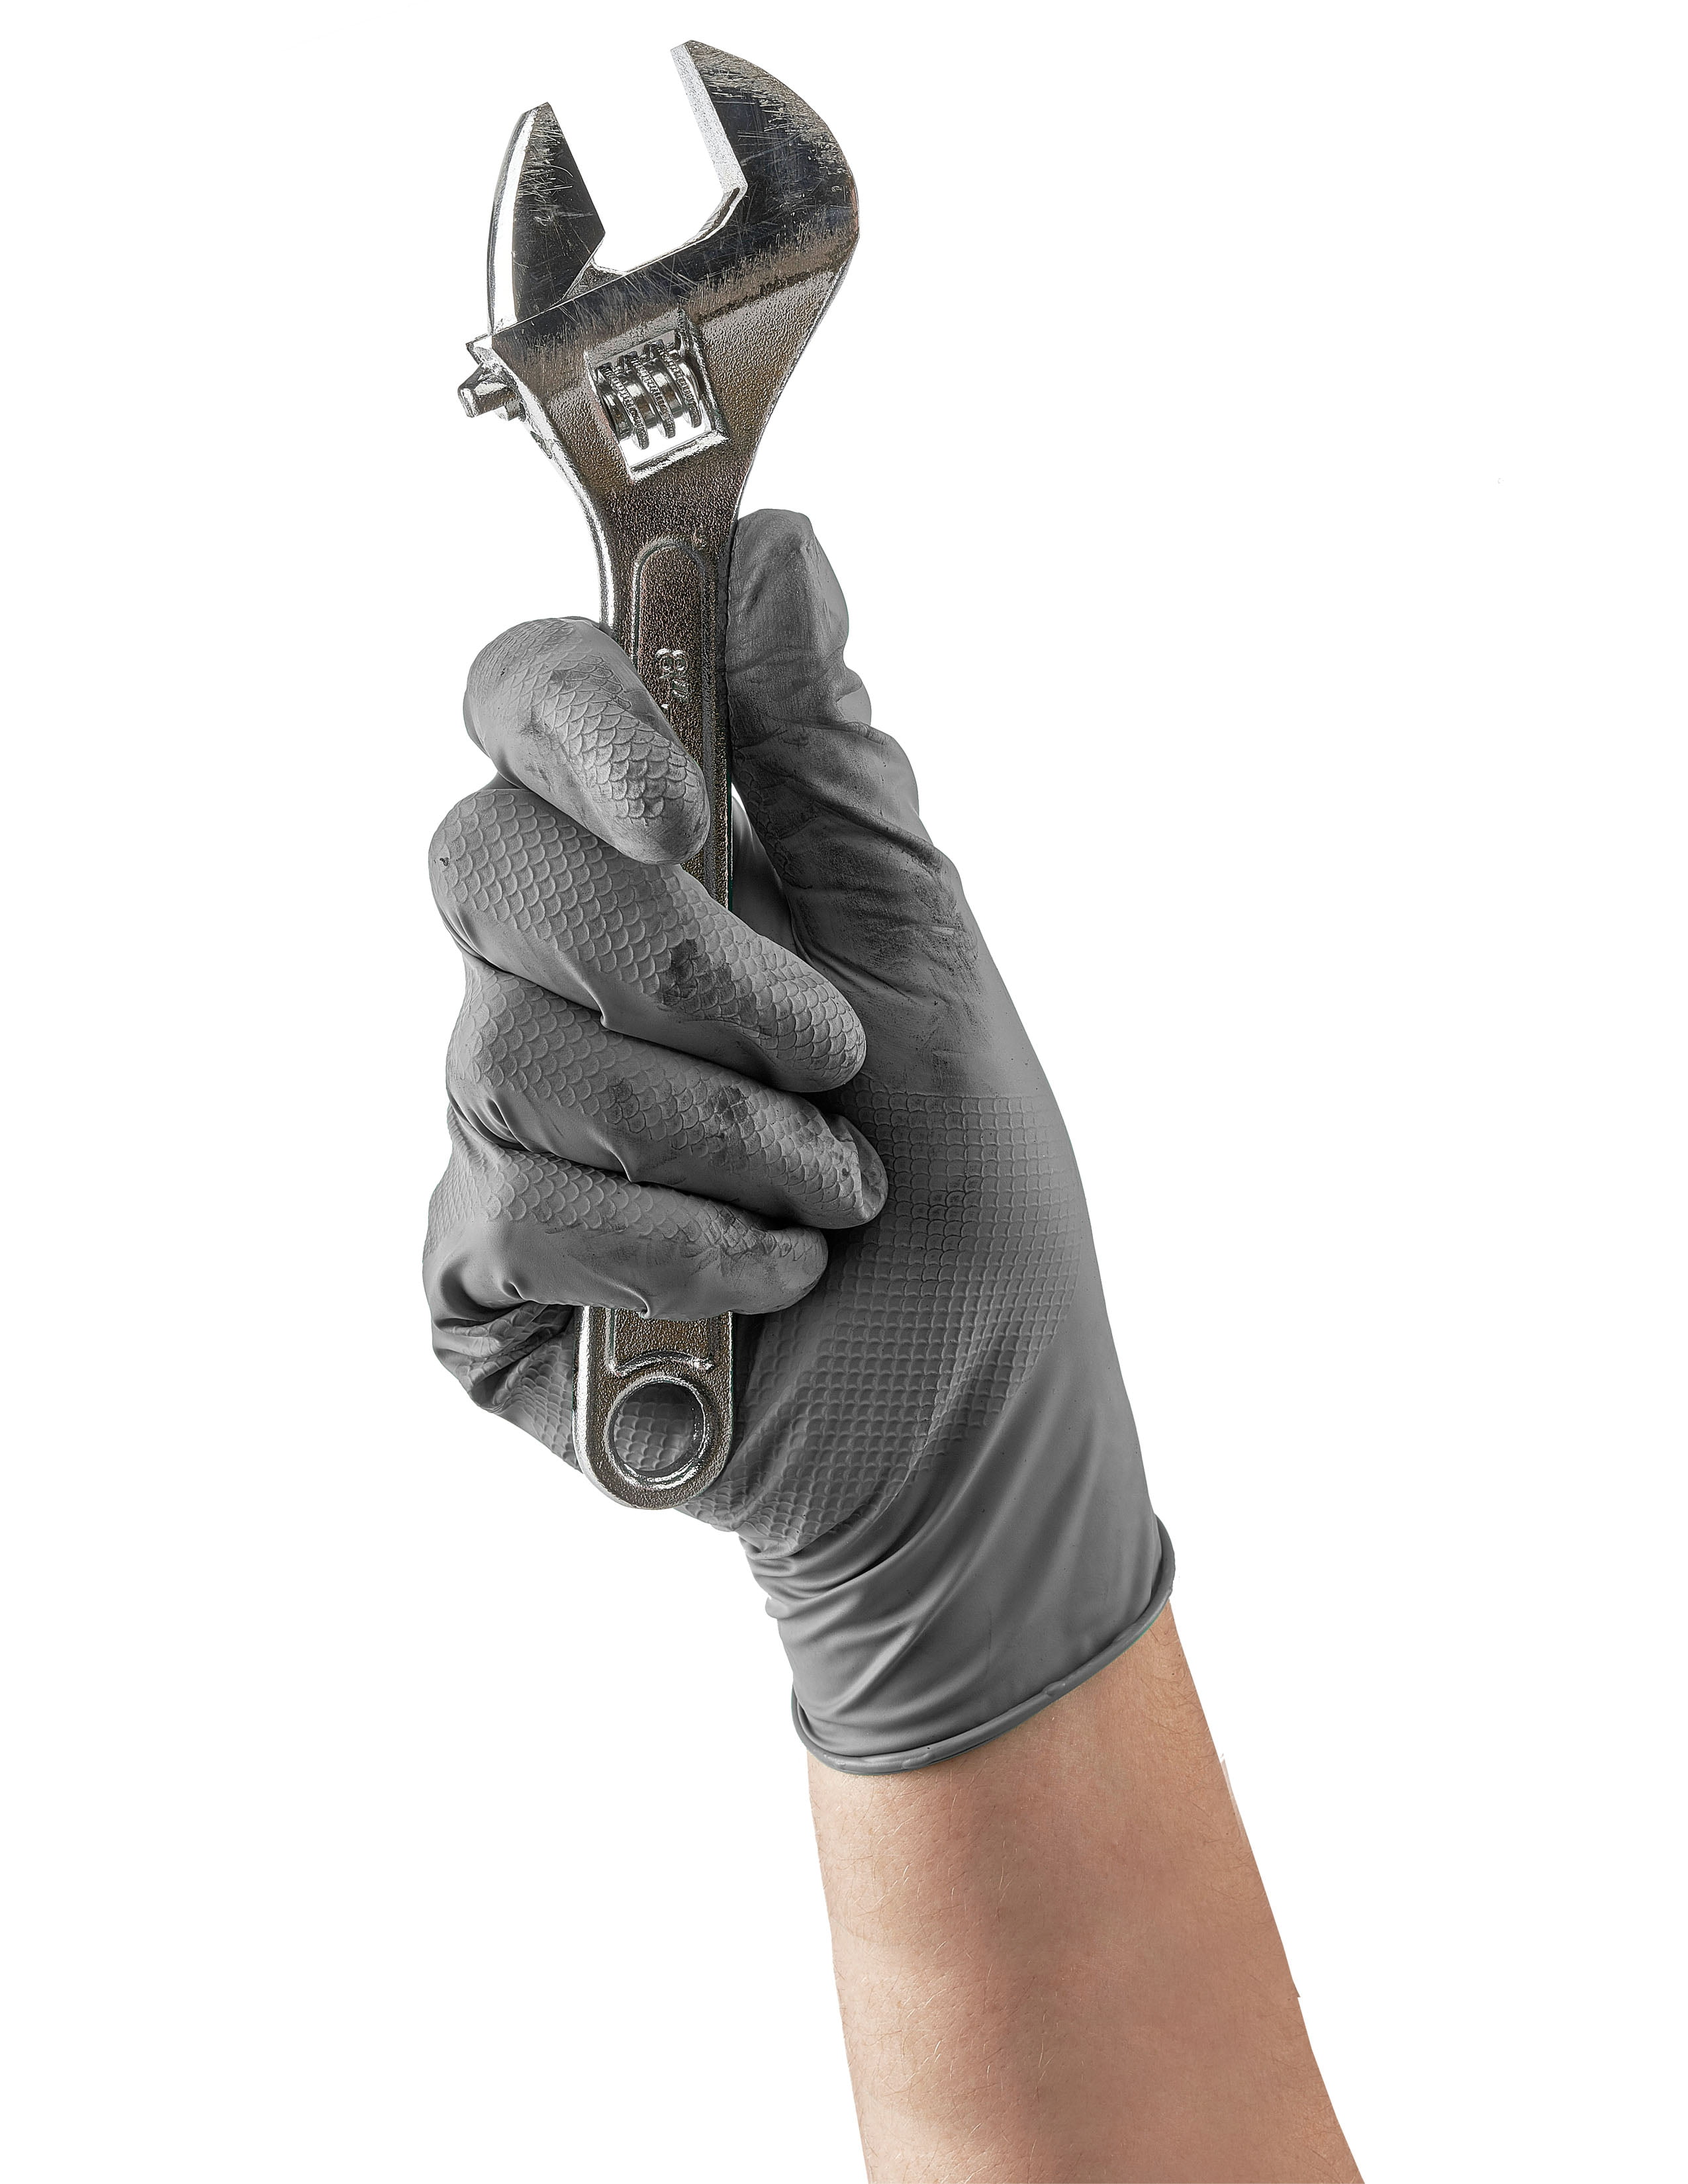 Watson Gloves Grease Monkey Disposable Nitrile Glove - 5 Mil